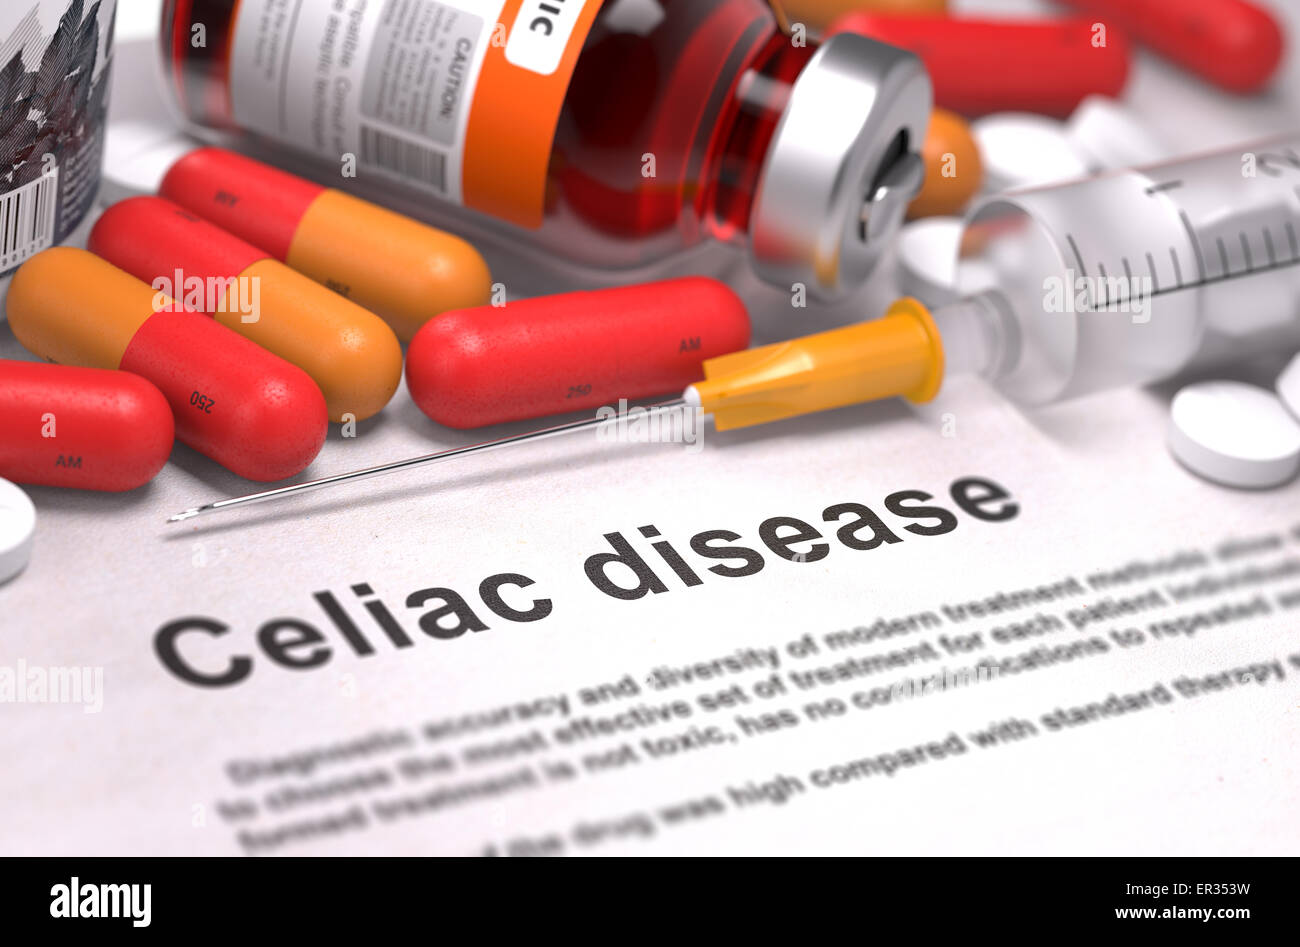 Diagnosi - La malattia celiaca. Concetto medico. 3D Render. Foto Stock